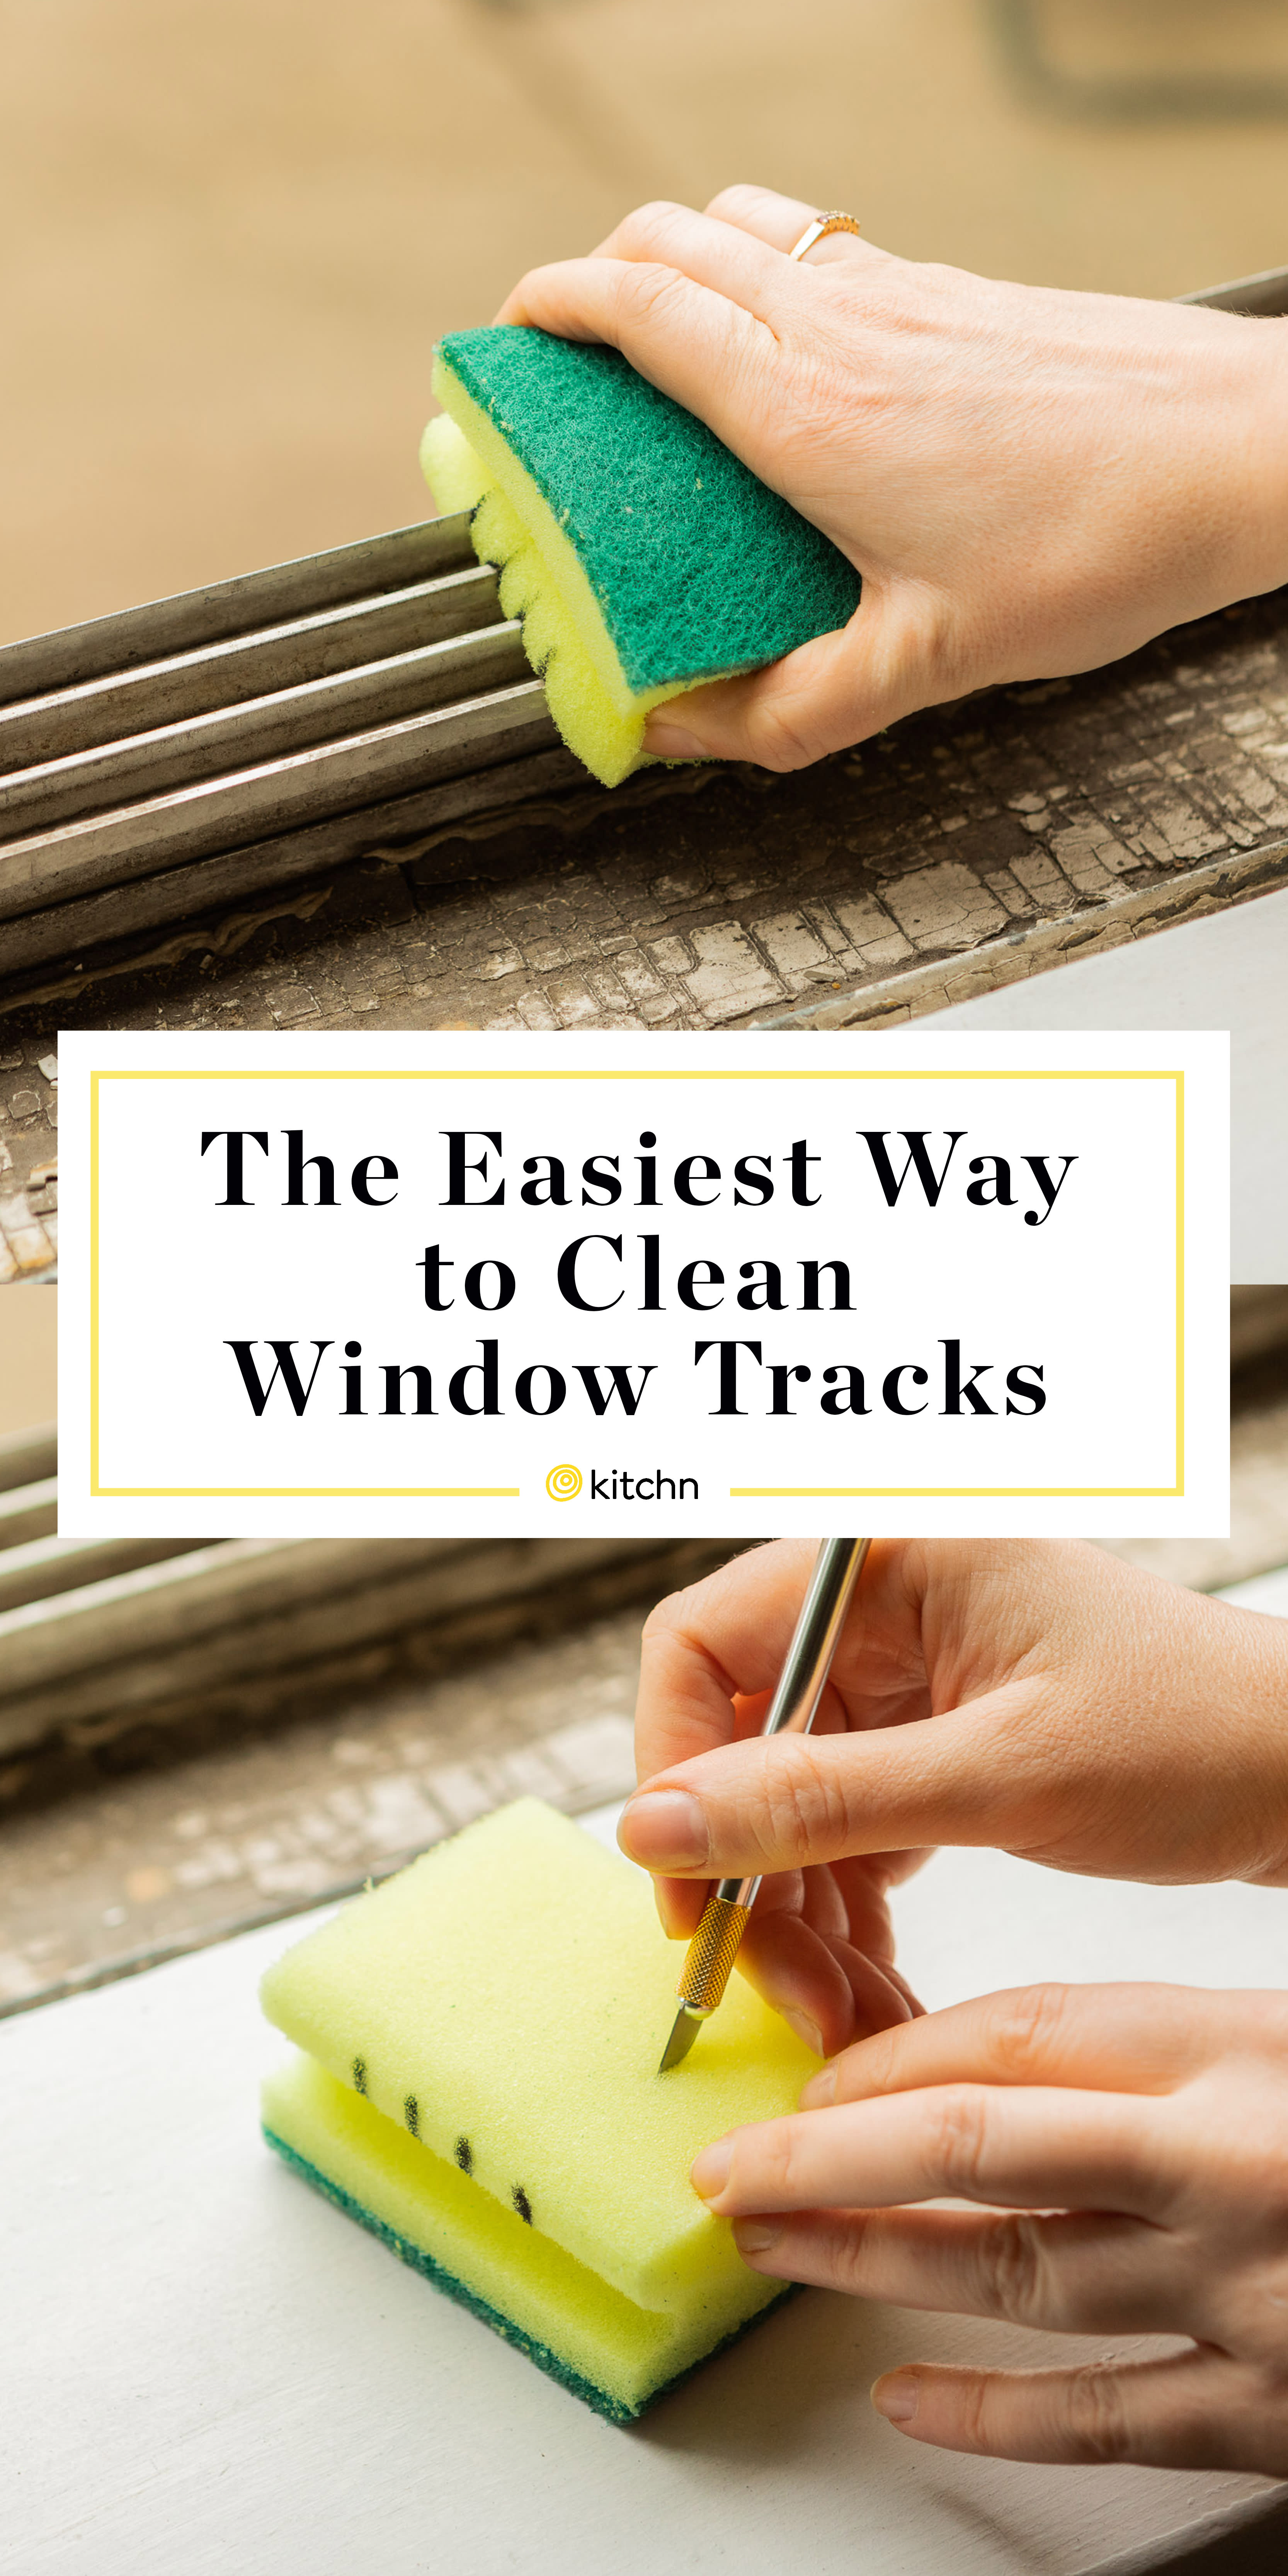 https://cdn.apartmenttherapy.info/image/upload/v1584722896/k/Photo/Lifestyle/2020-03-Clean-Grimy-Window-Tracks/theeasiestwaytocleanwindowtracks.jpg